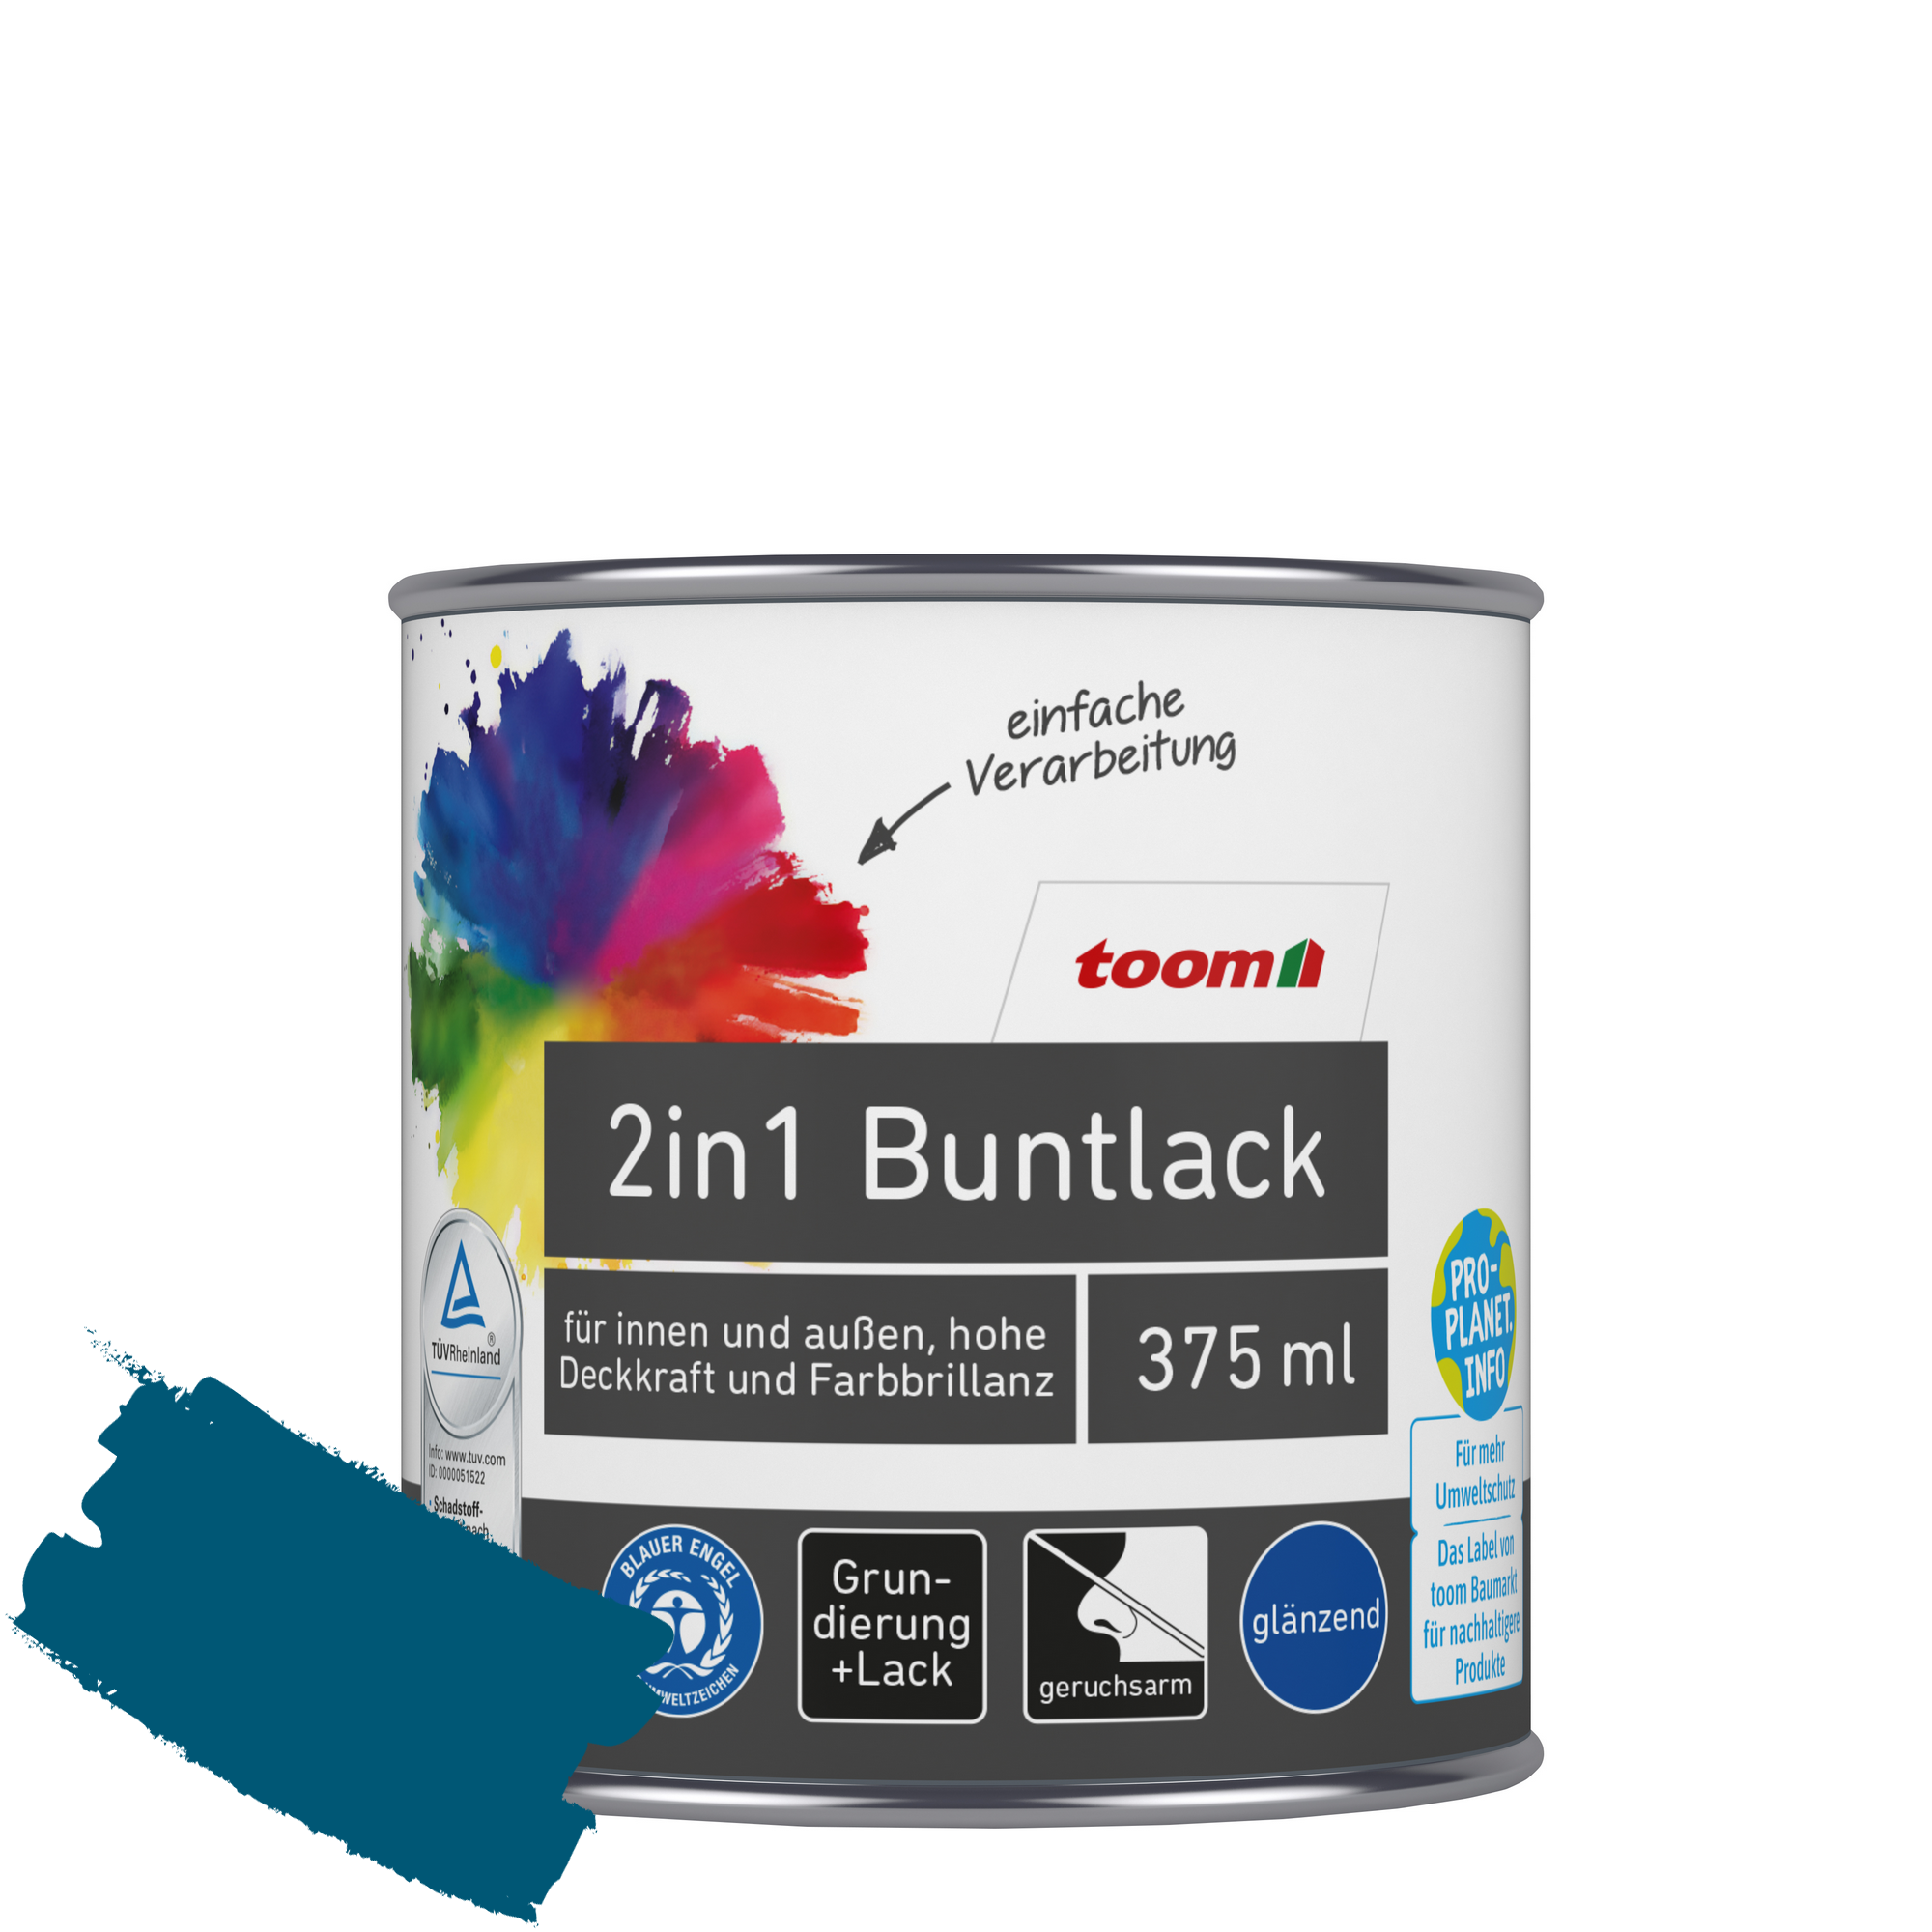 2in1 Buntlack 'Blaupause' enzianblau glänzend 375 ml + product picture